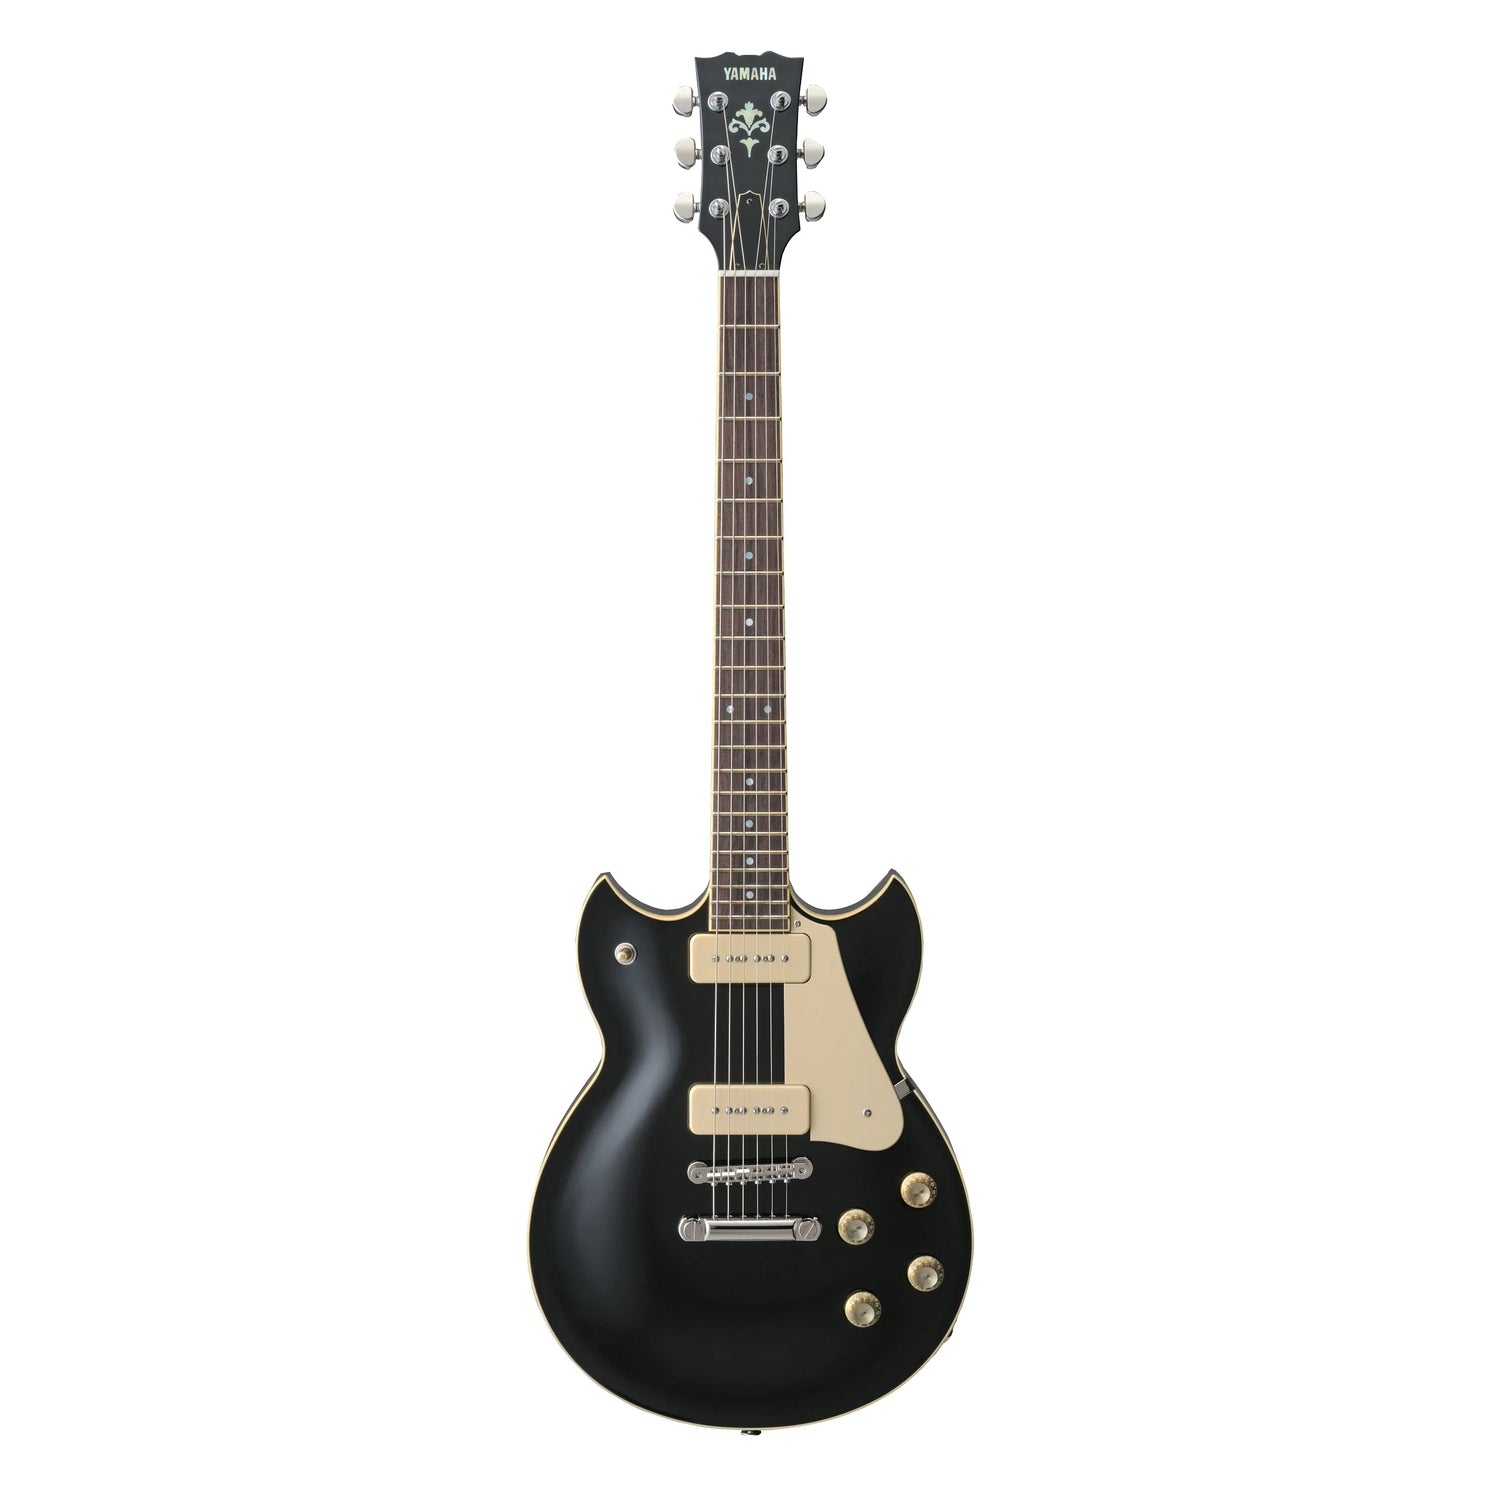 Yamaha SG Series Guitars